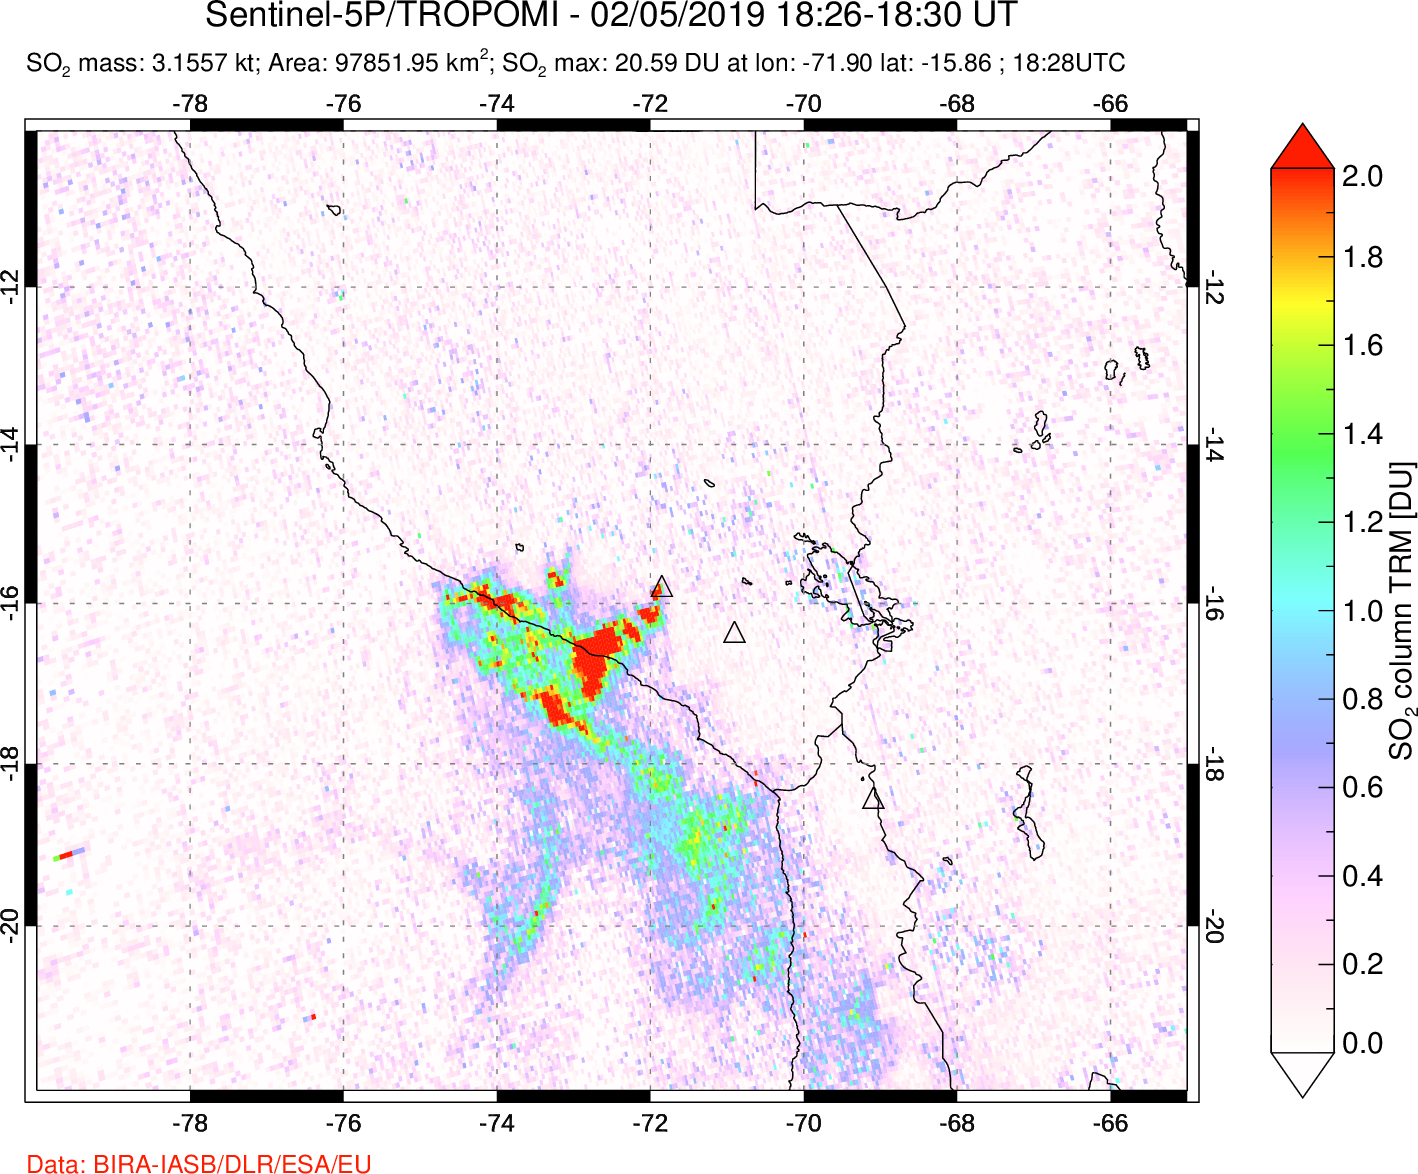 A sulfur dioxide image over Peru on Feb 05, 2019.